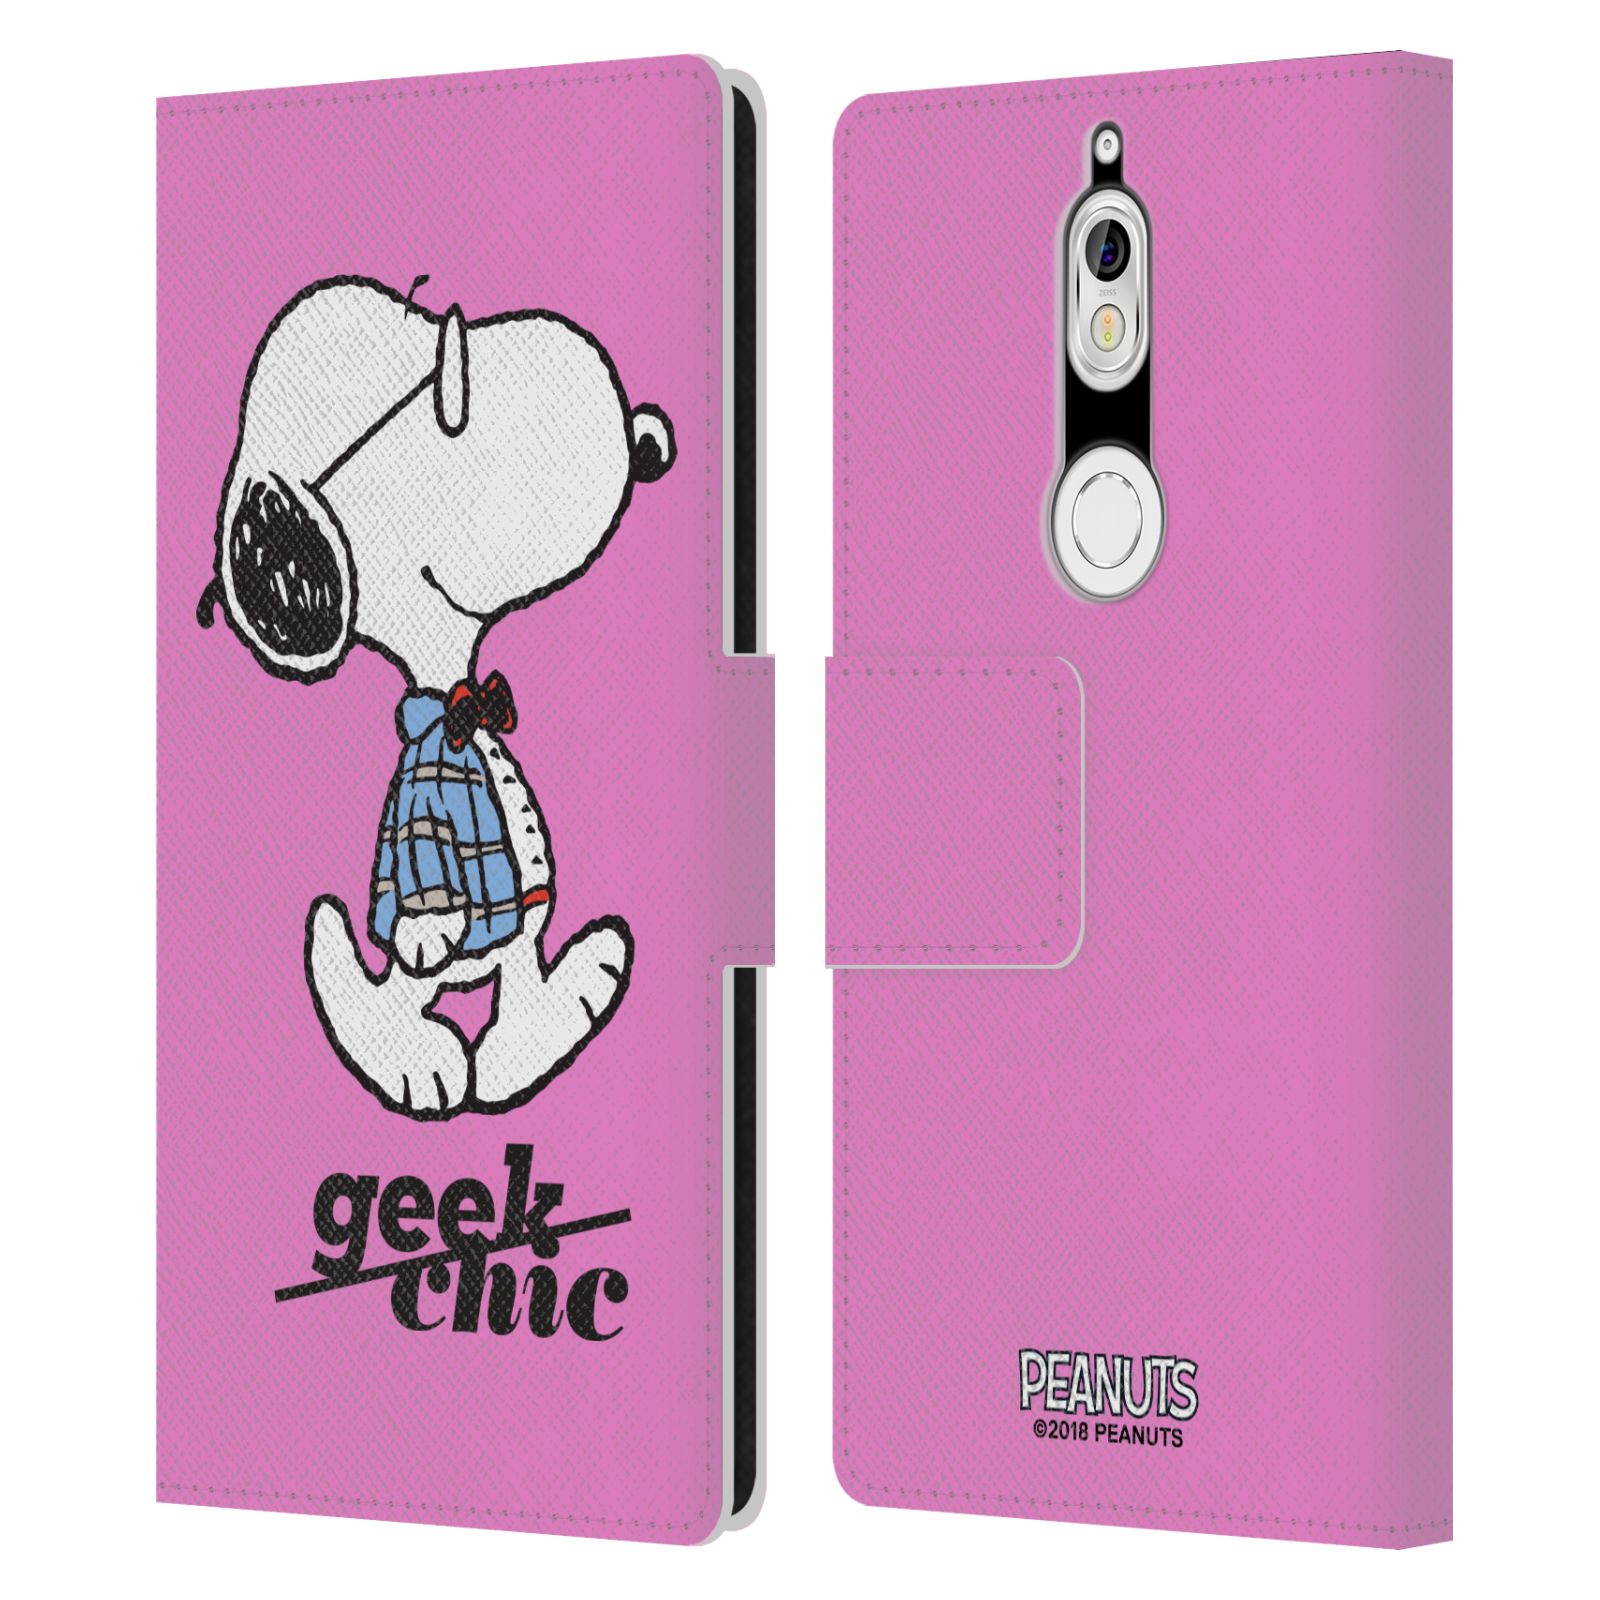 Pouzdro na mobil Nokia 7 - Head Case - Peanuts - růžový pejsek snoopy nerd